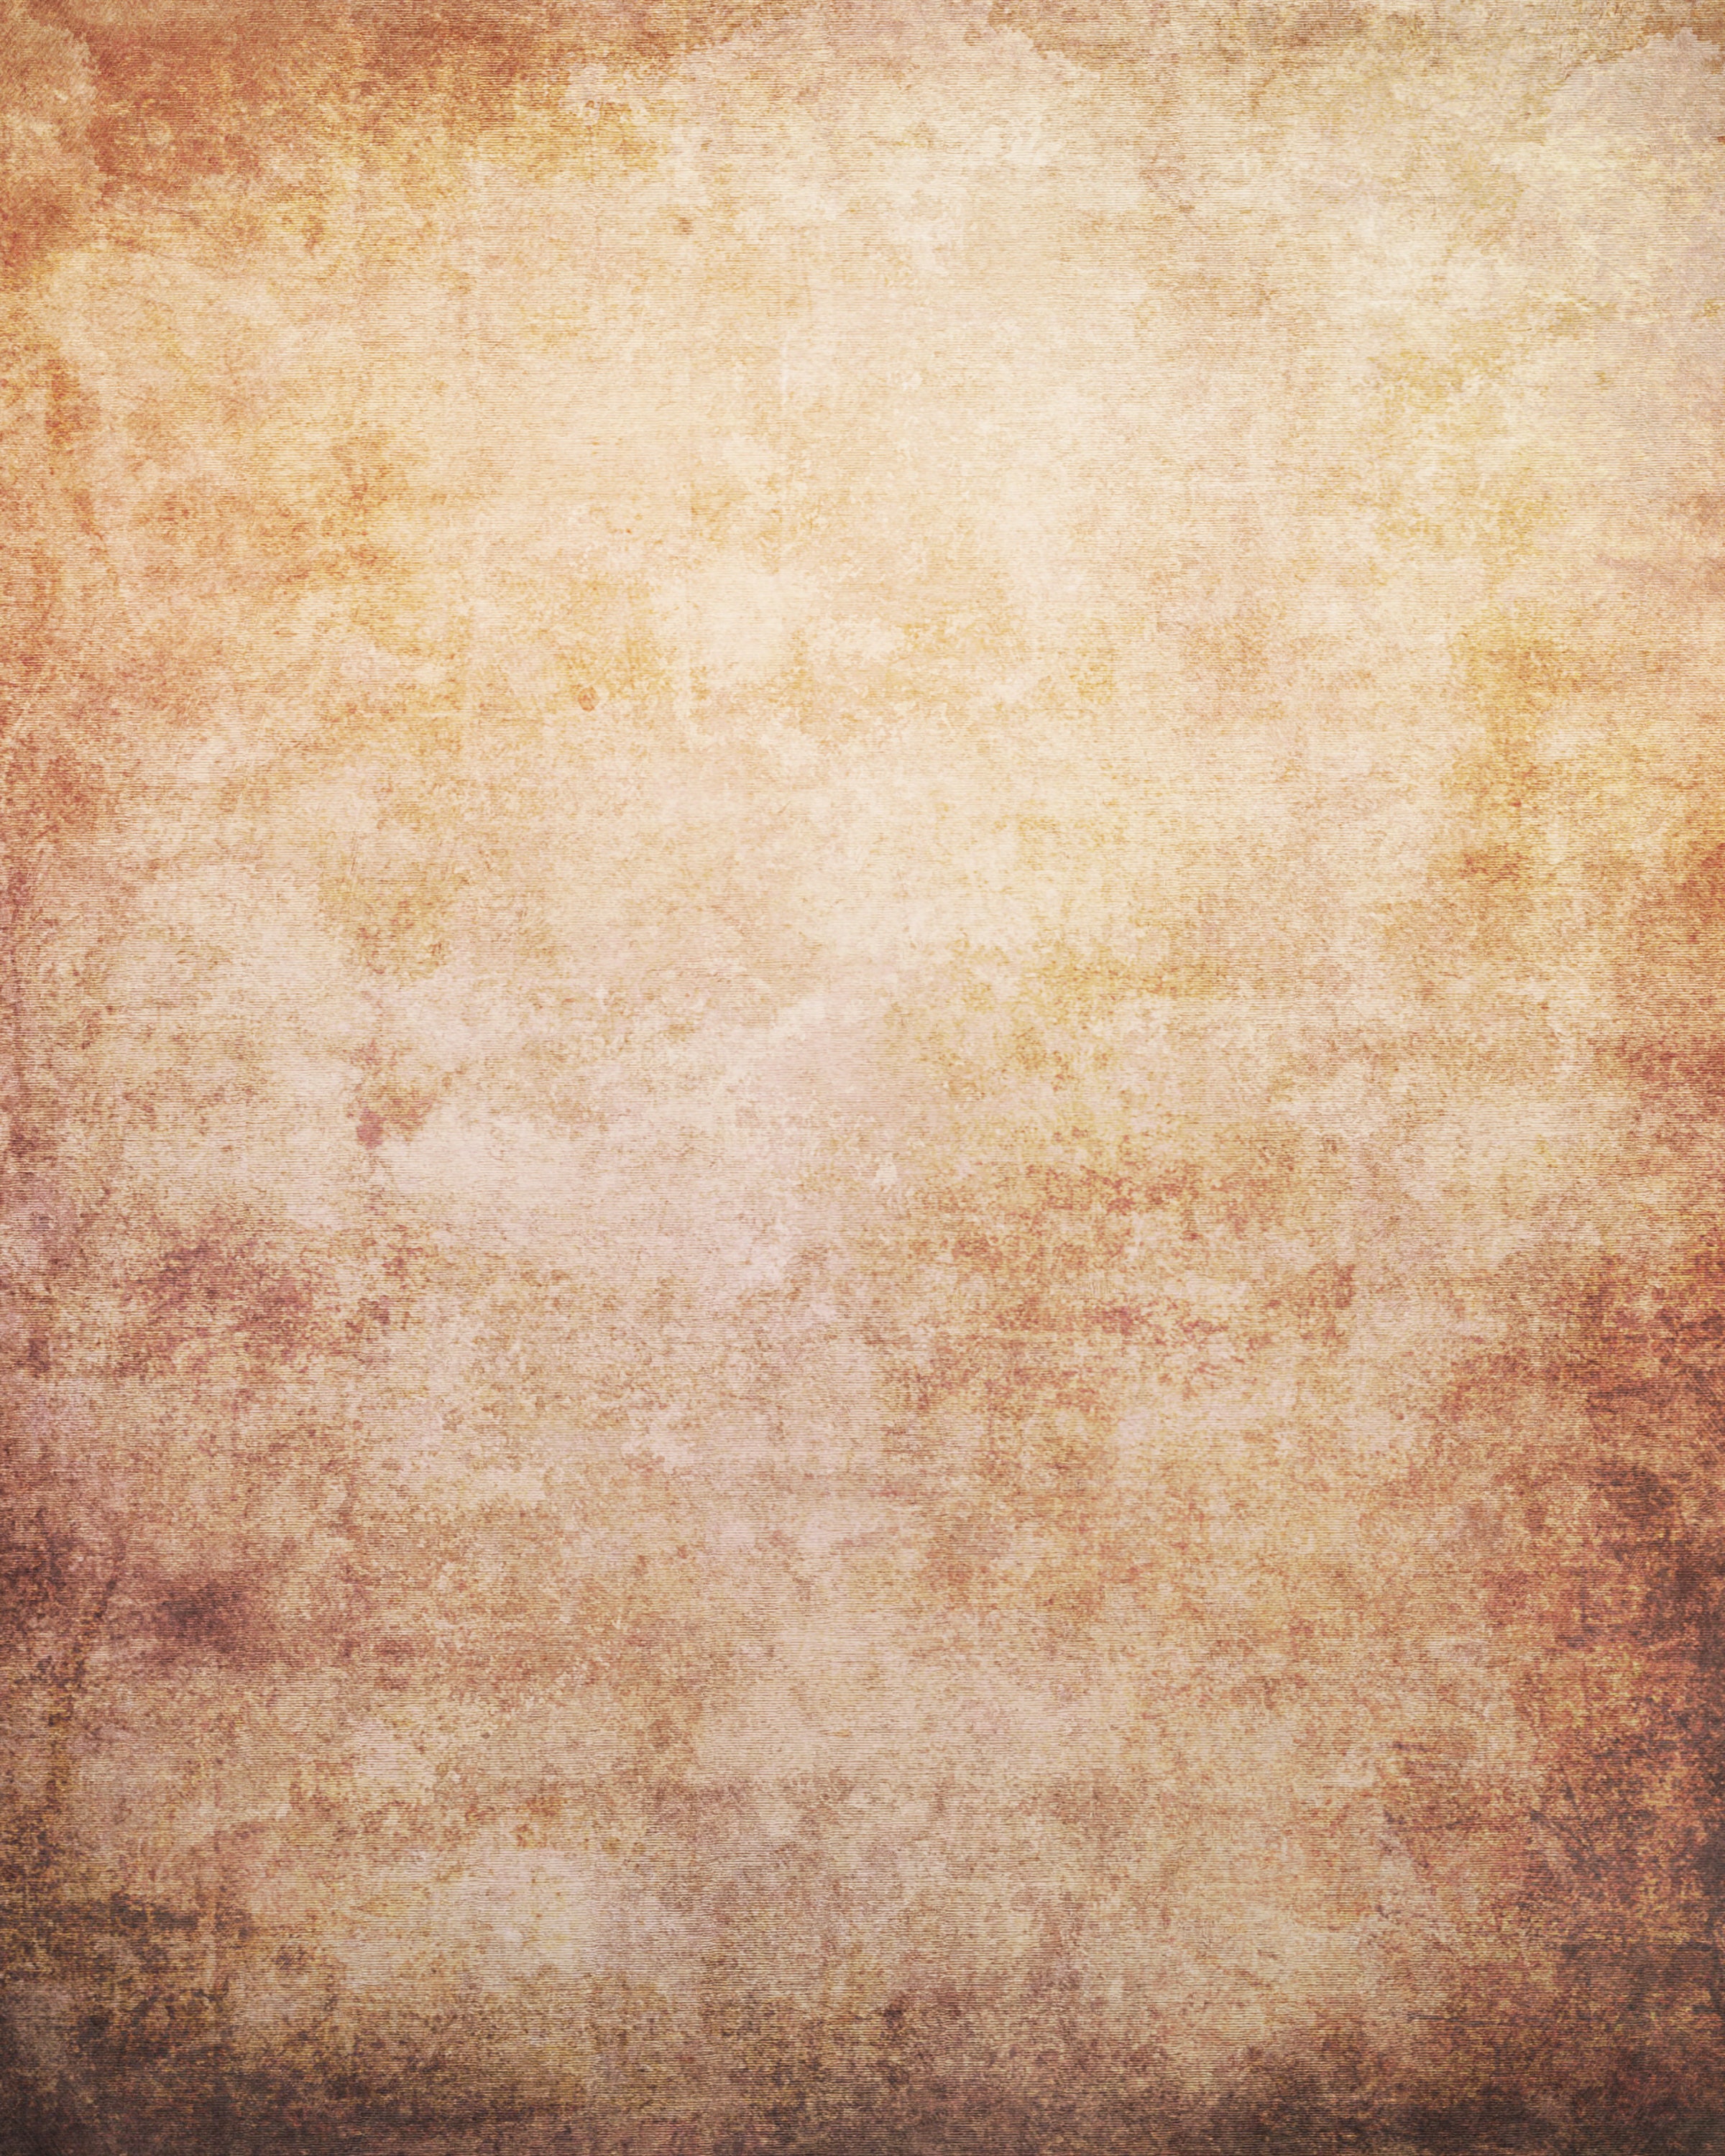 Antique Paper Cream Backdrop | Digital Background | Texture | Overlay |  Digital Paper - High Resolution .jpg file | Instant Download